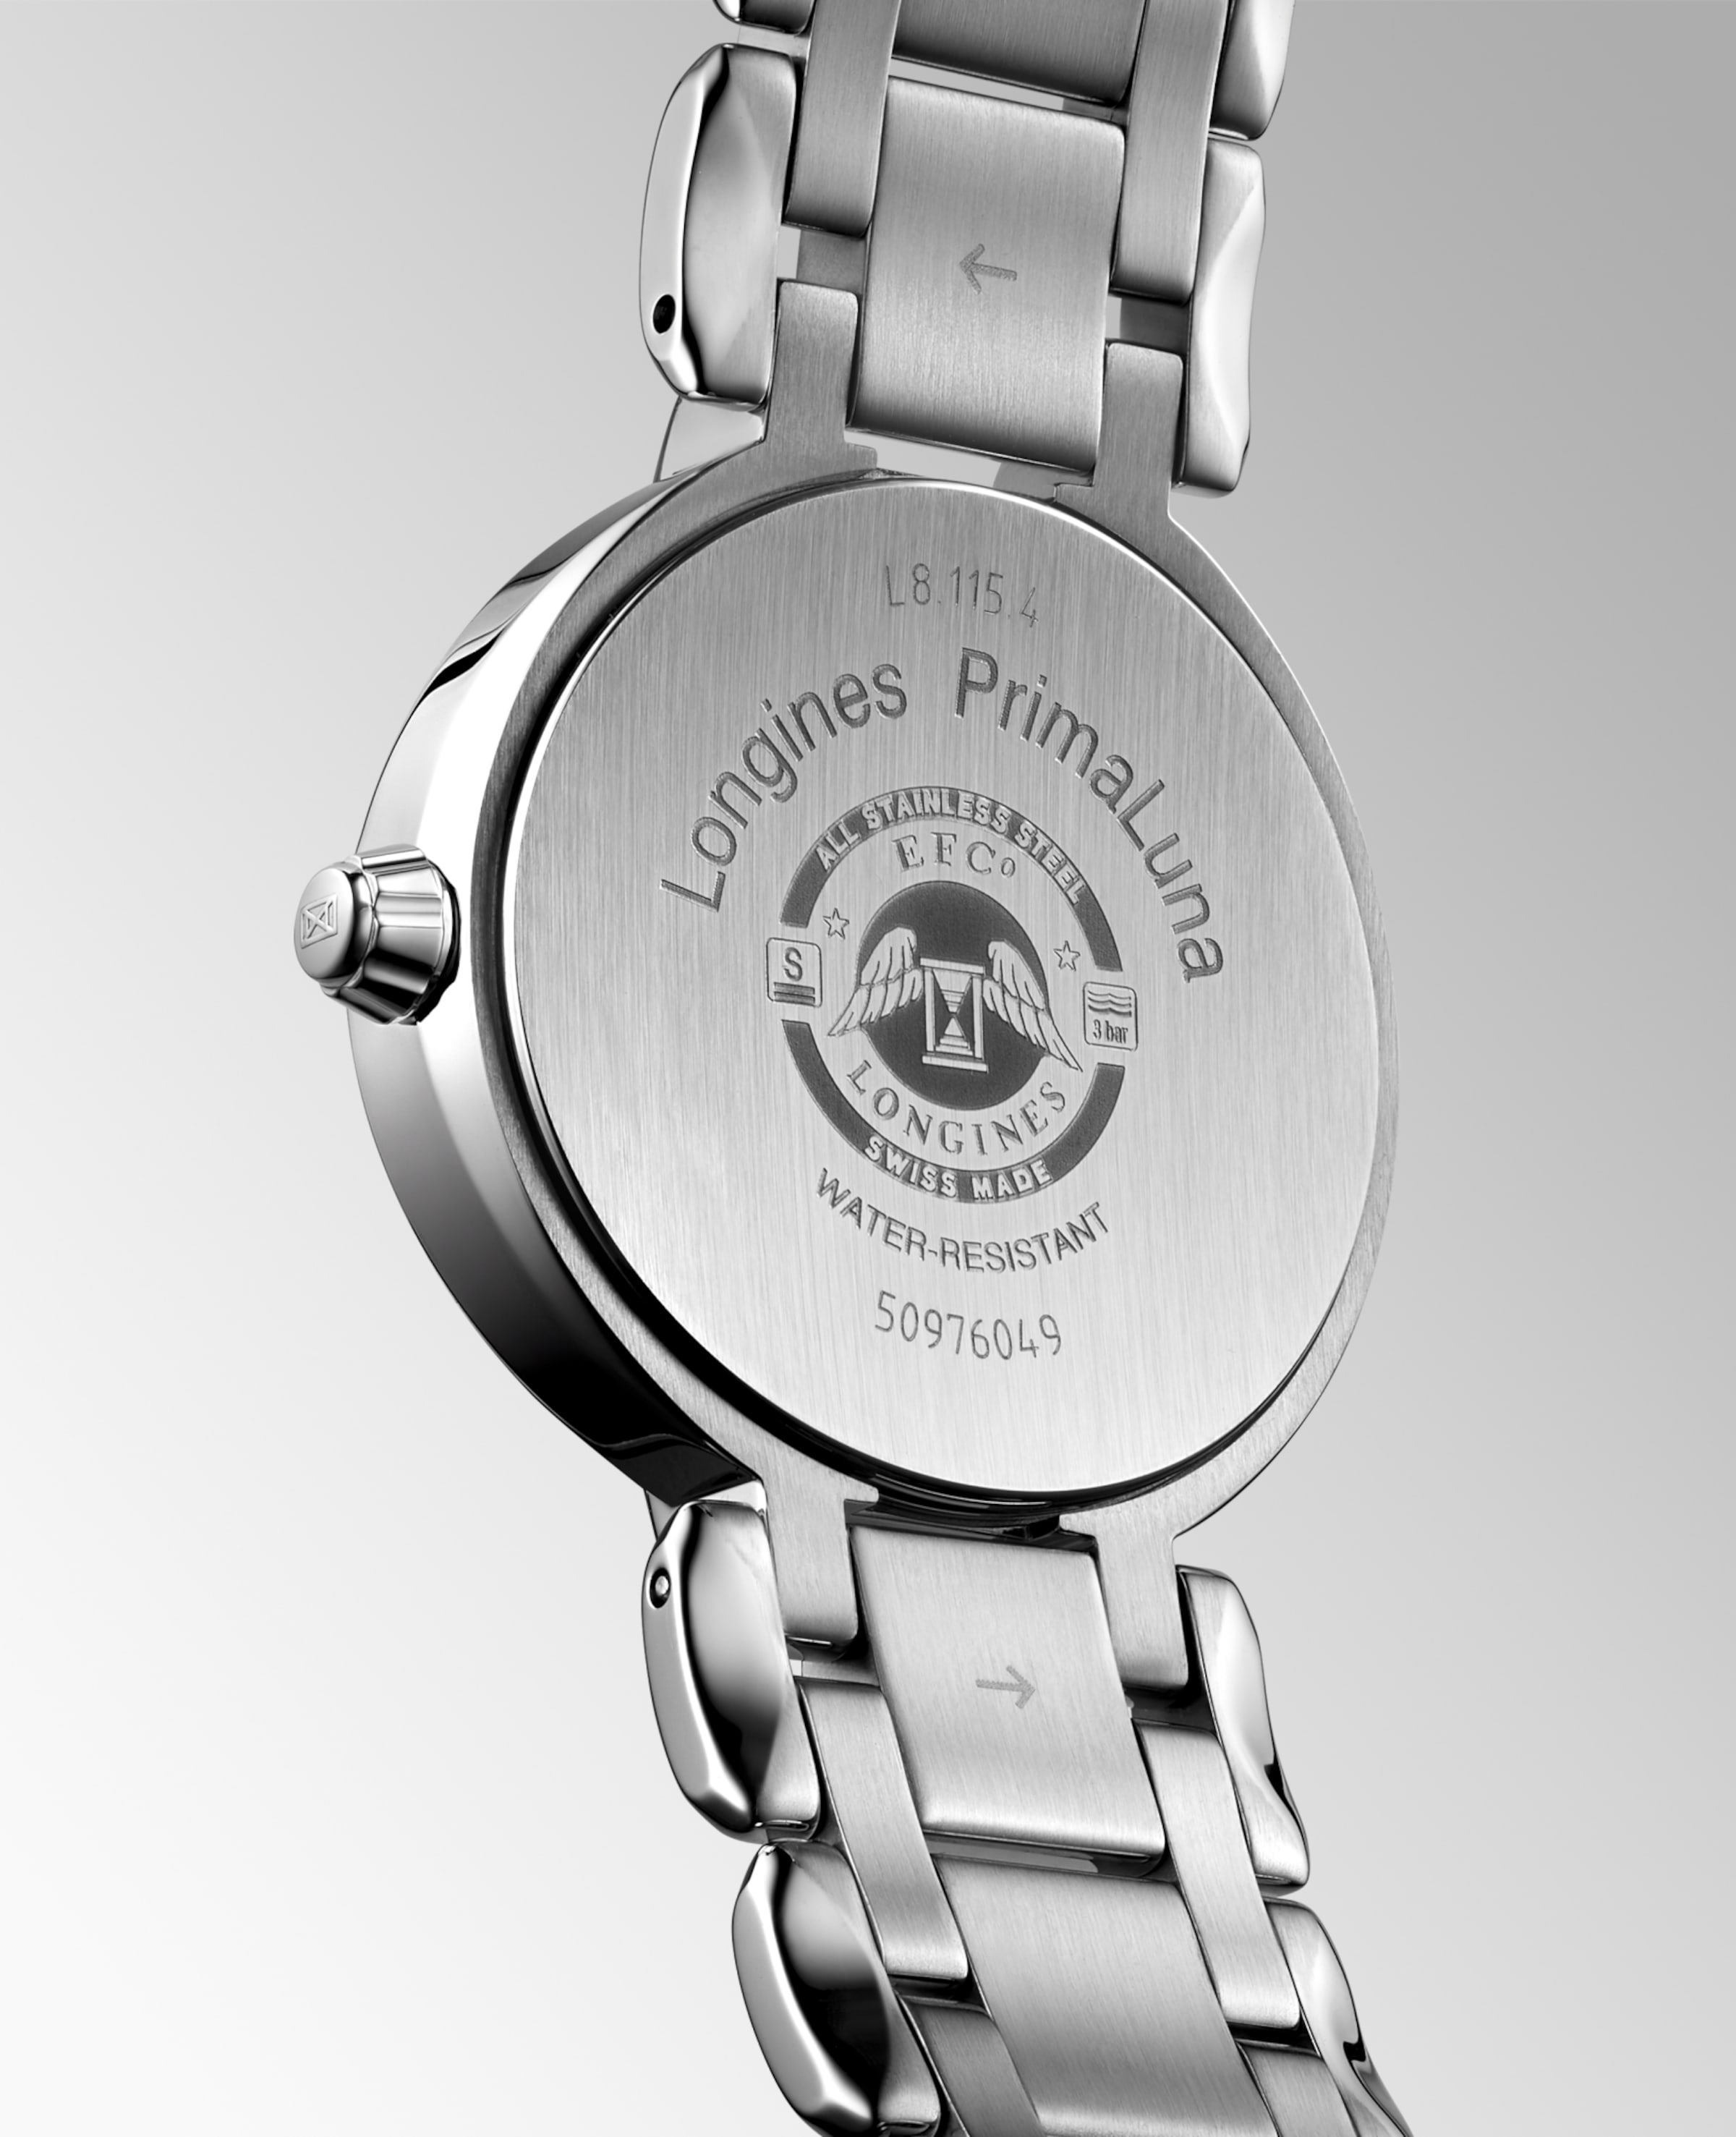 Longines PRIMALUNA Quartz Stainless steel Watch - L8.115.4.98.6